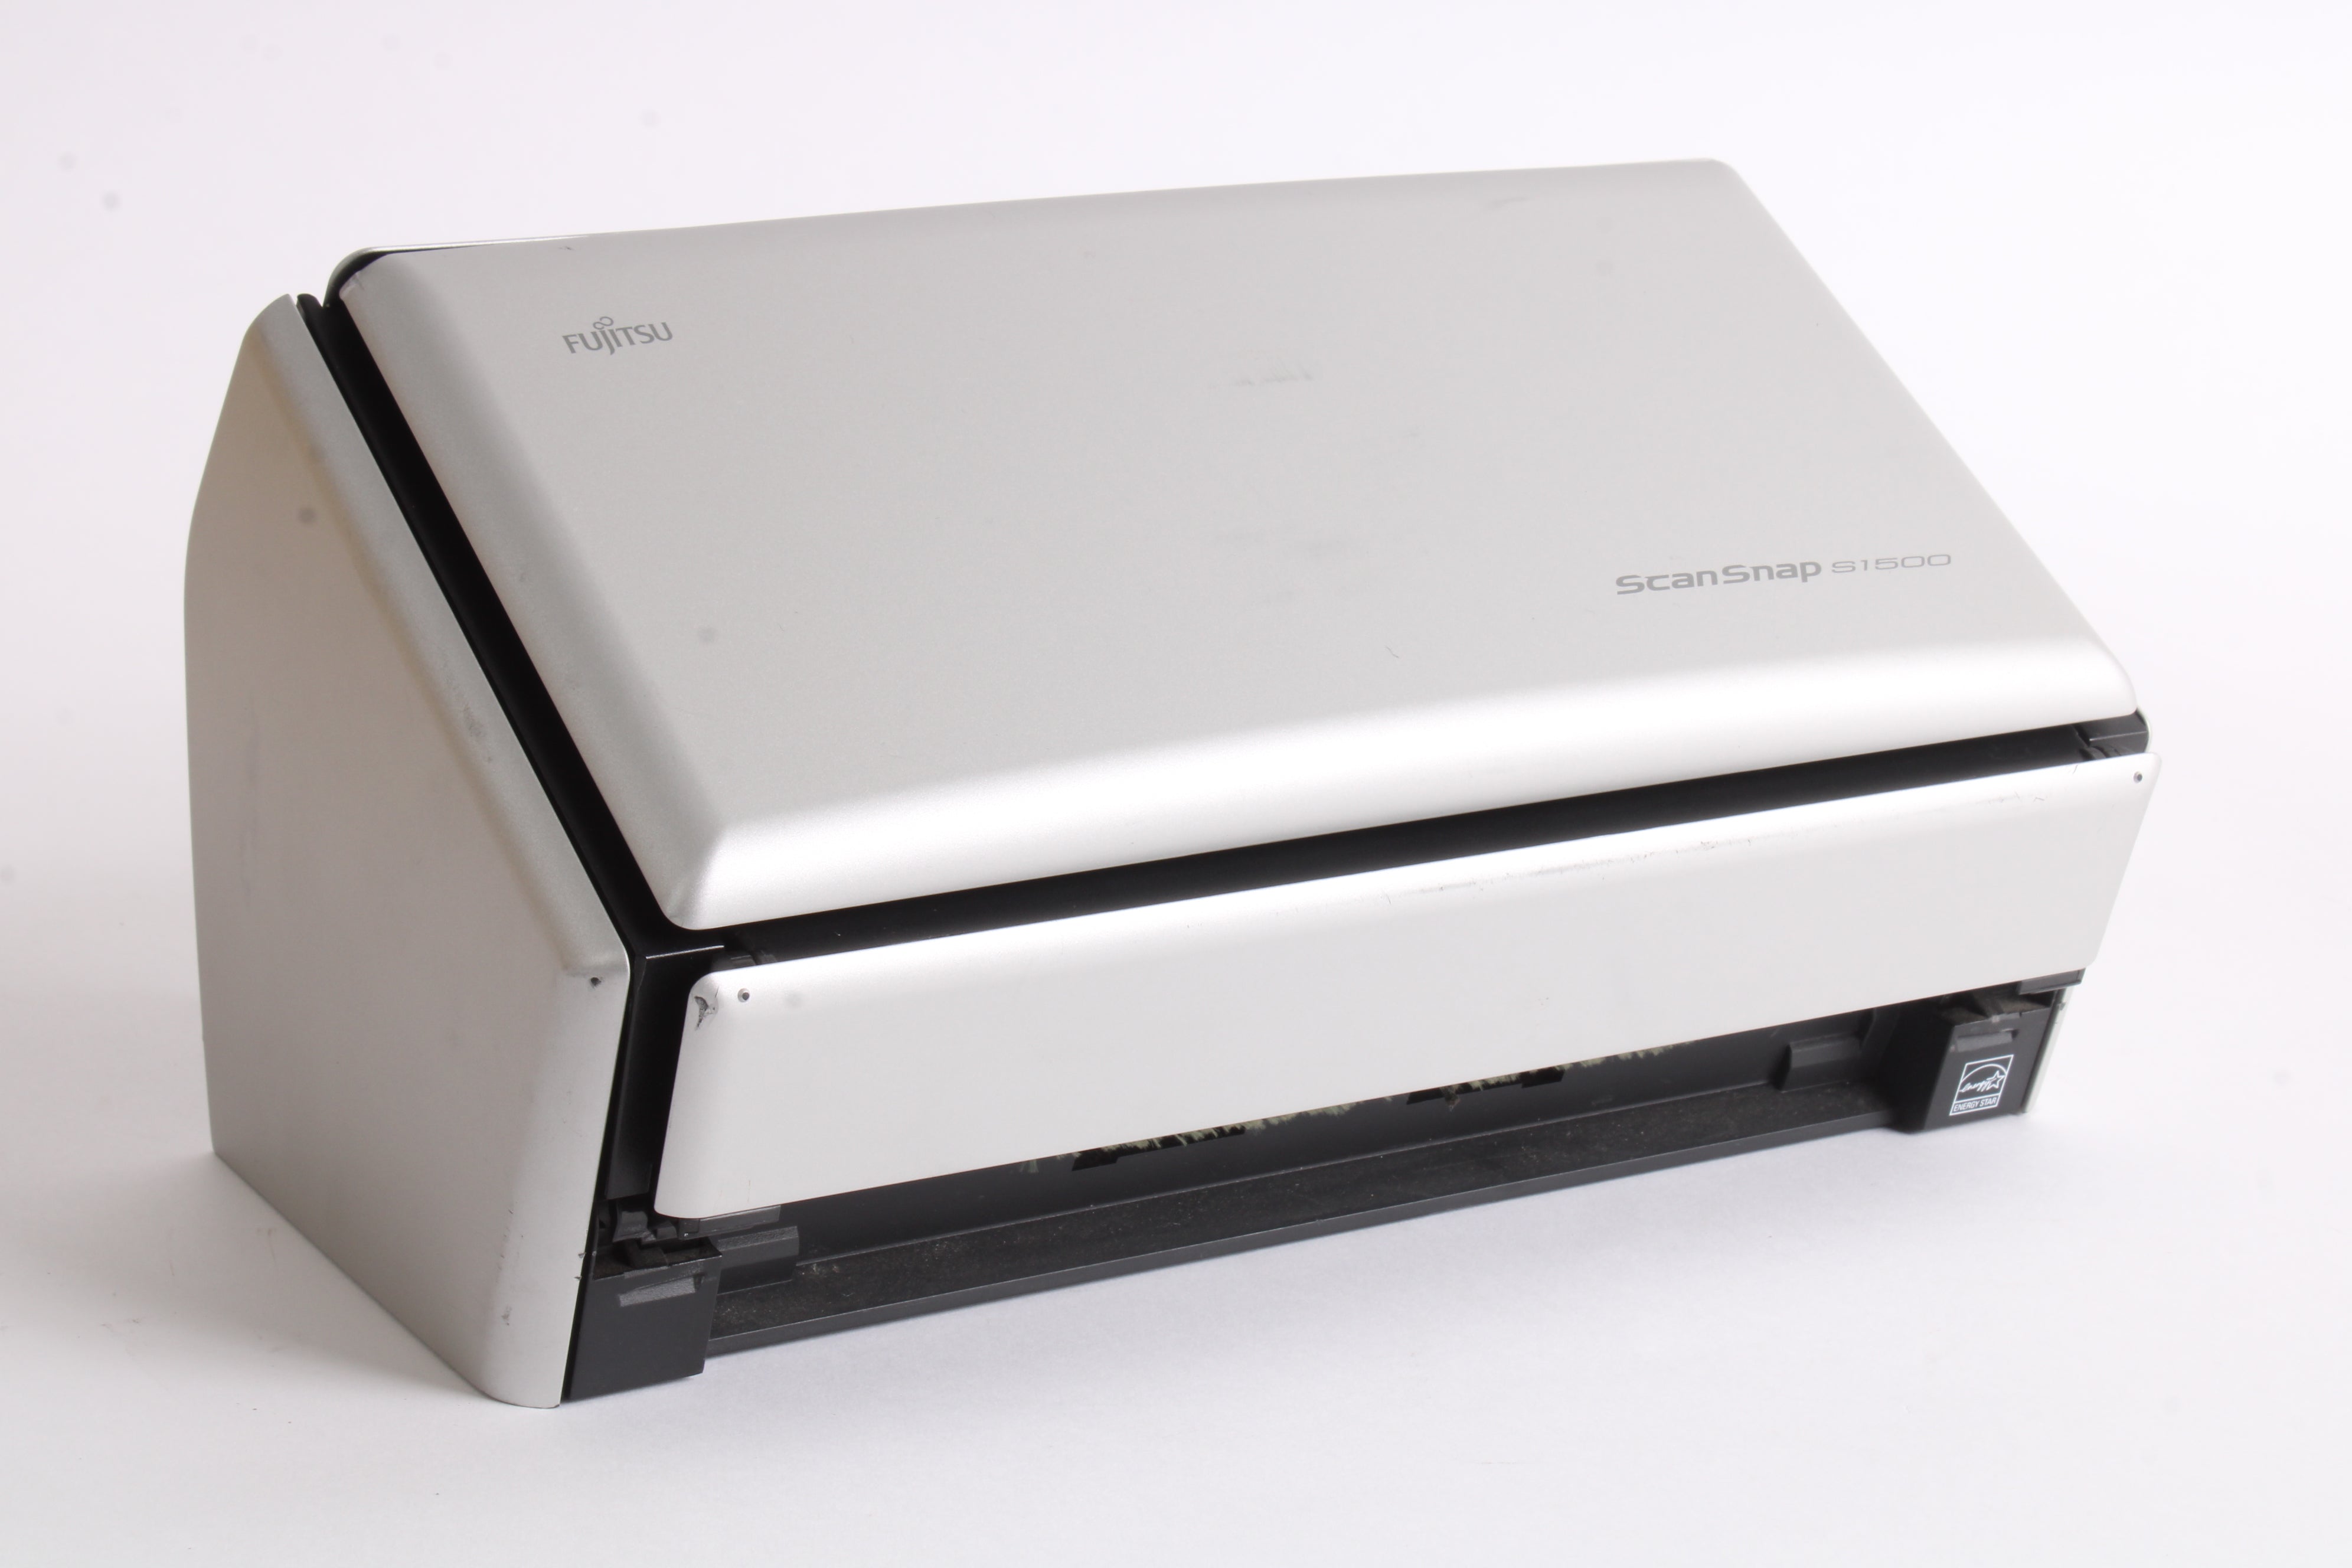 Fujitsu ScanSnap S1500 Scanner PA03586-B005 - Both Trays and PSU 